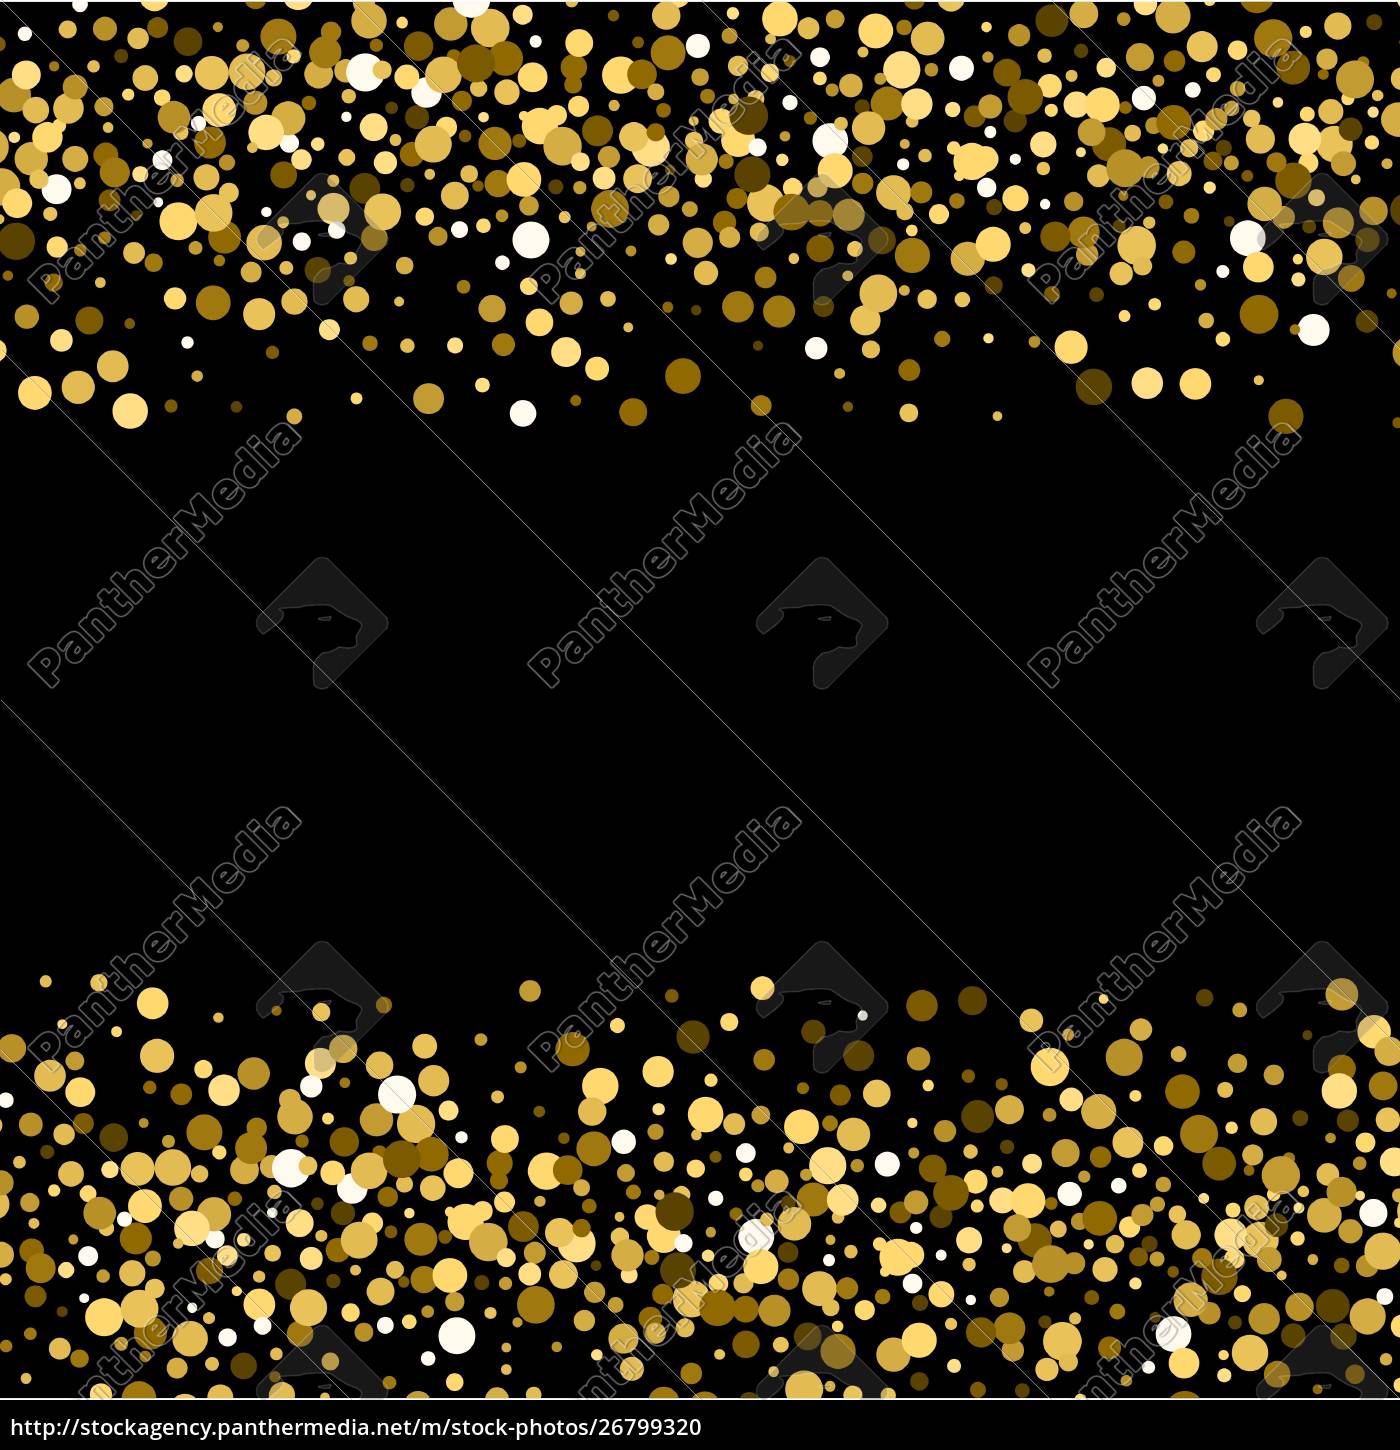 Fundo dourado glitter dourados #310868 - TemplateMonster